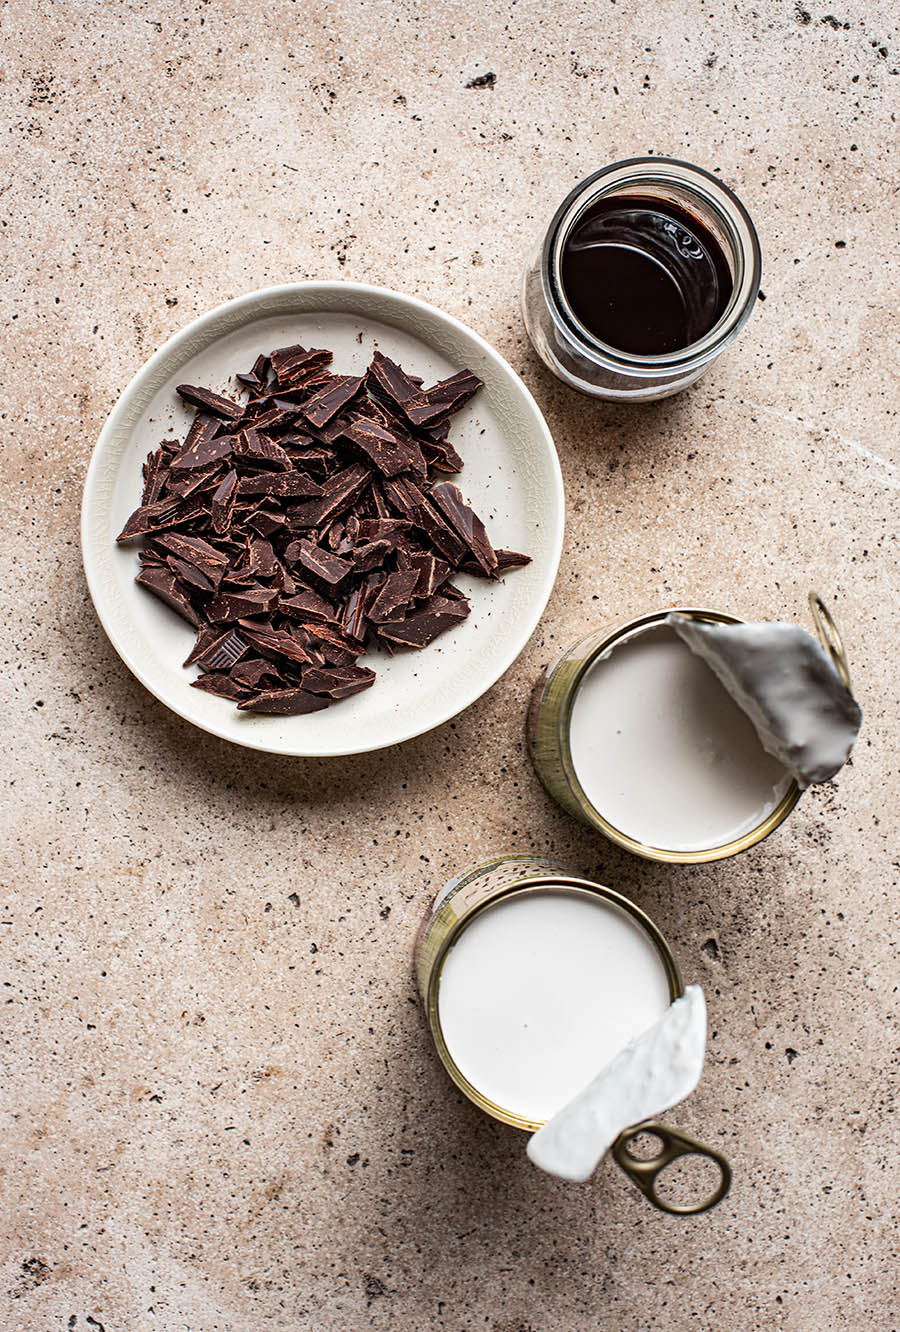 Vegan chocolate ice cream ingredients: dark chocolate, date syrup, and coconut milk.